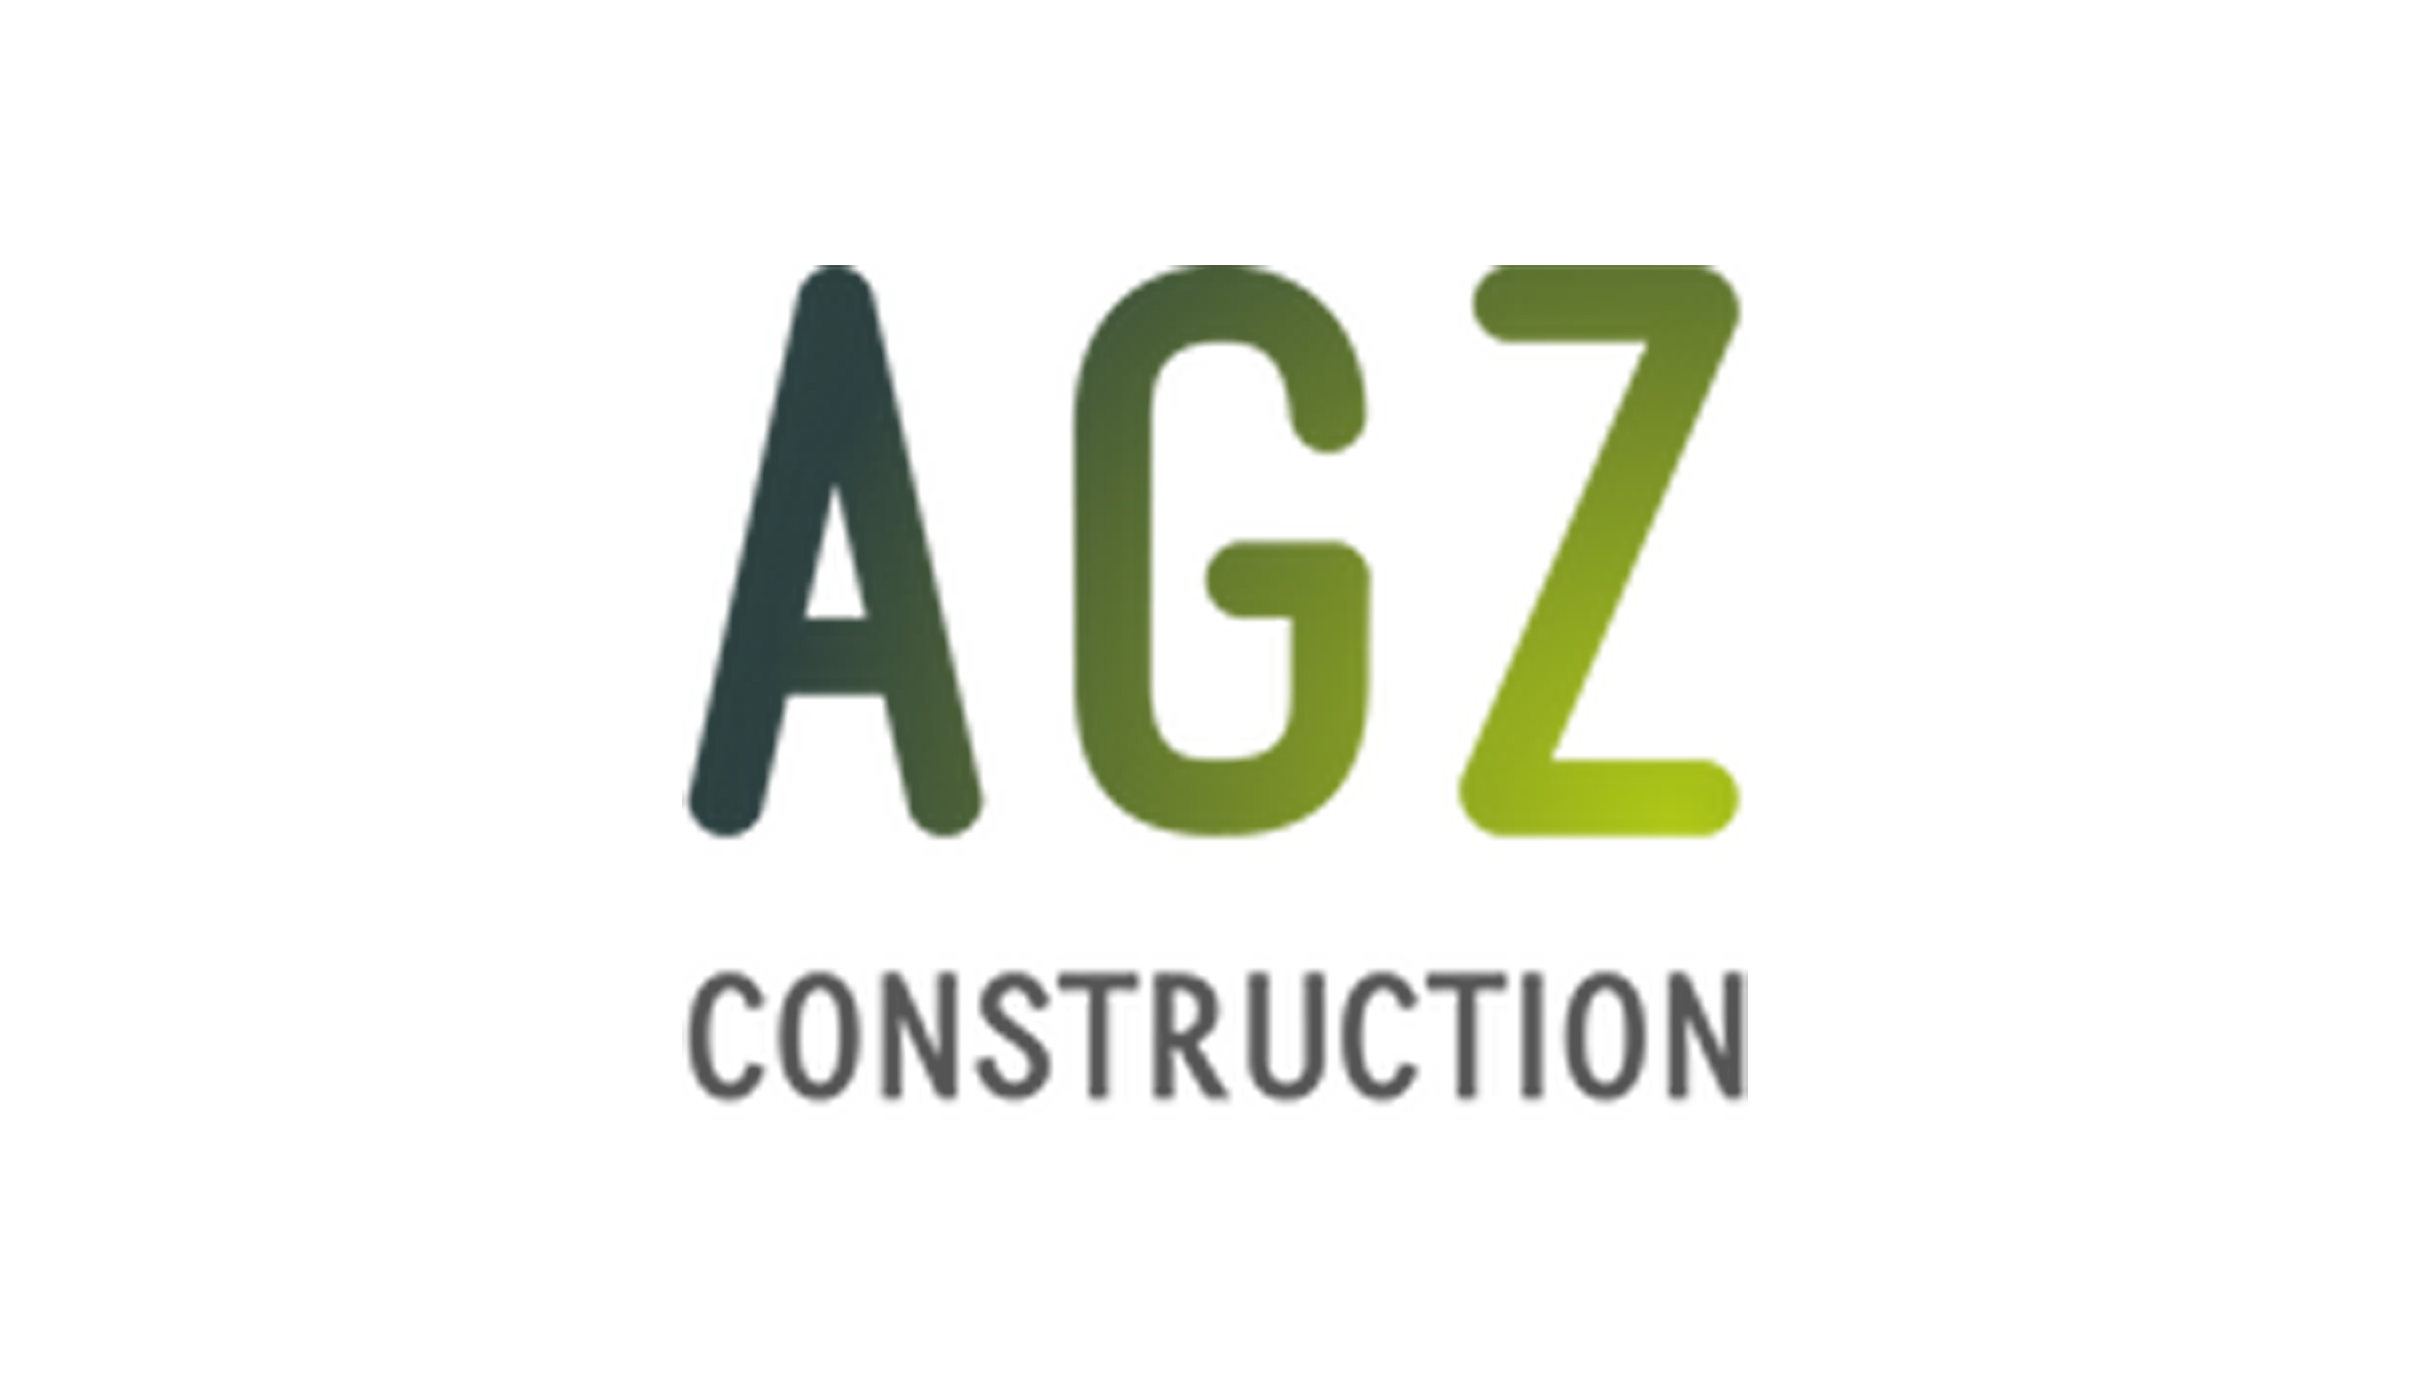 Logo AGZ construction